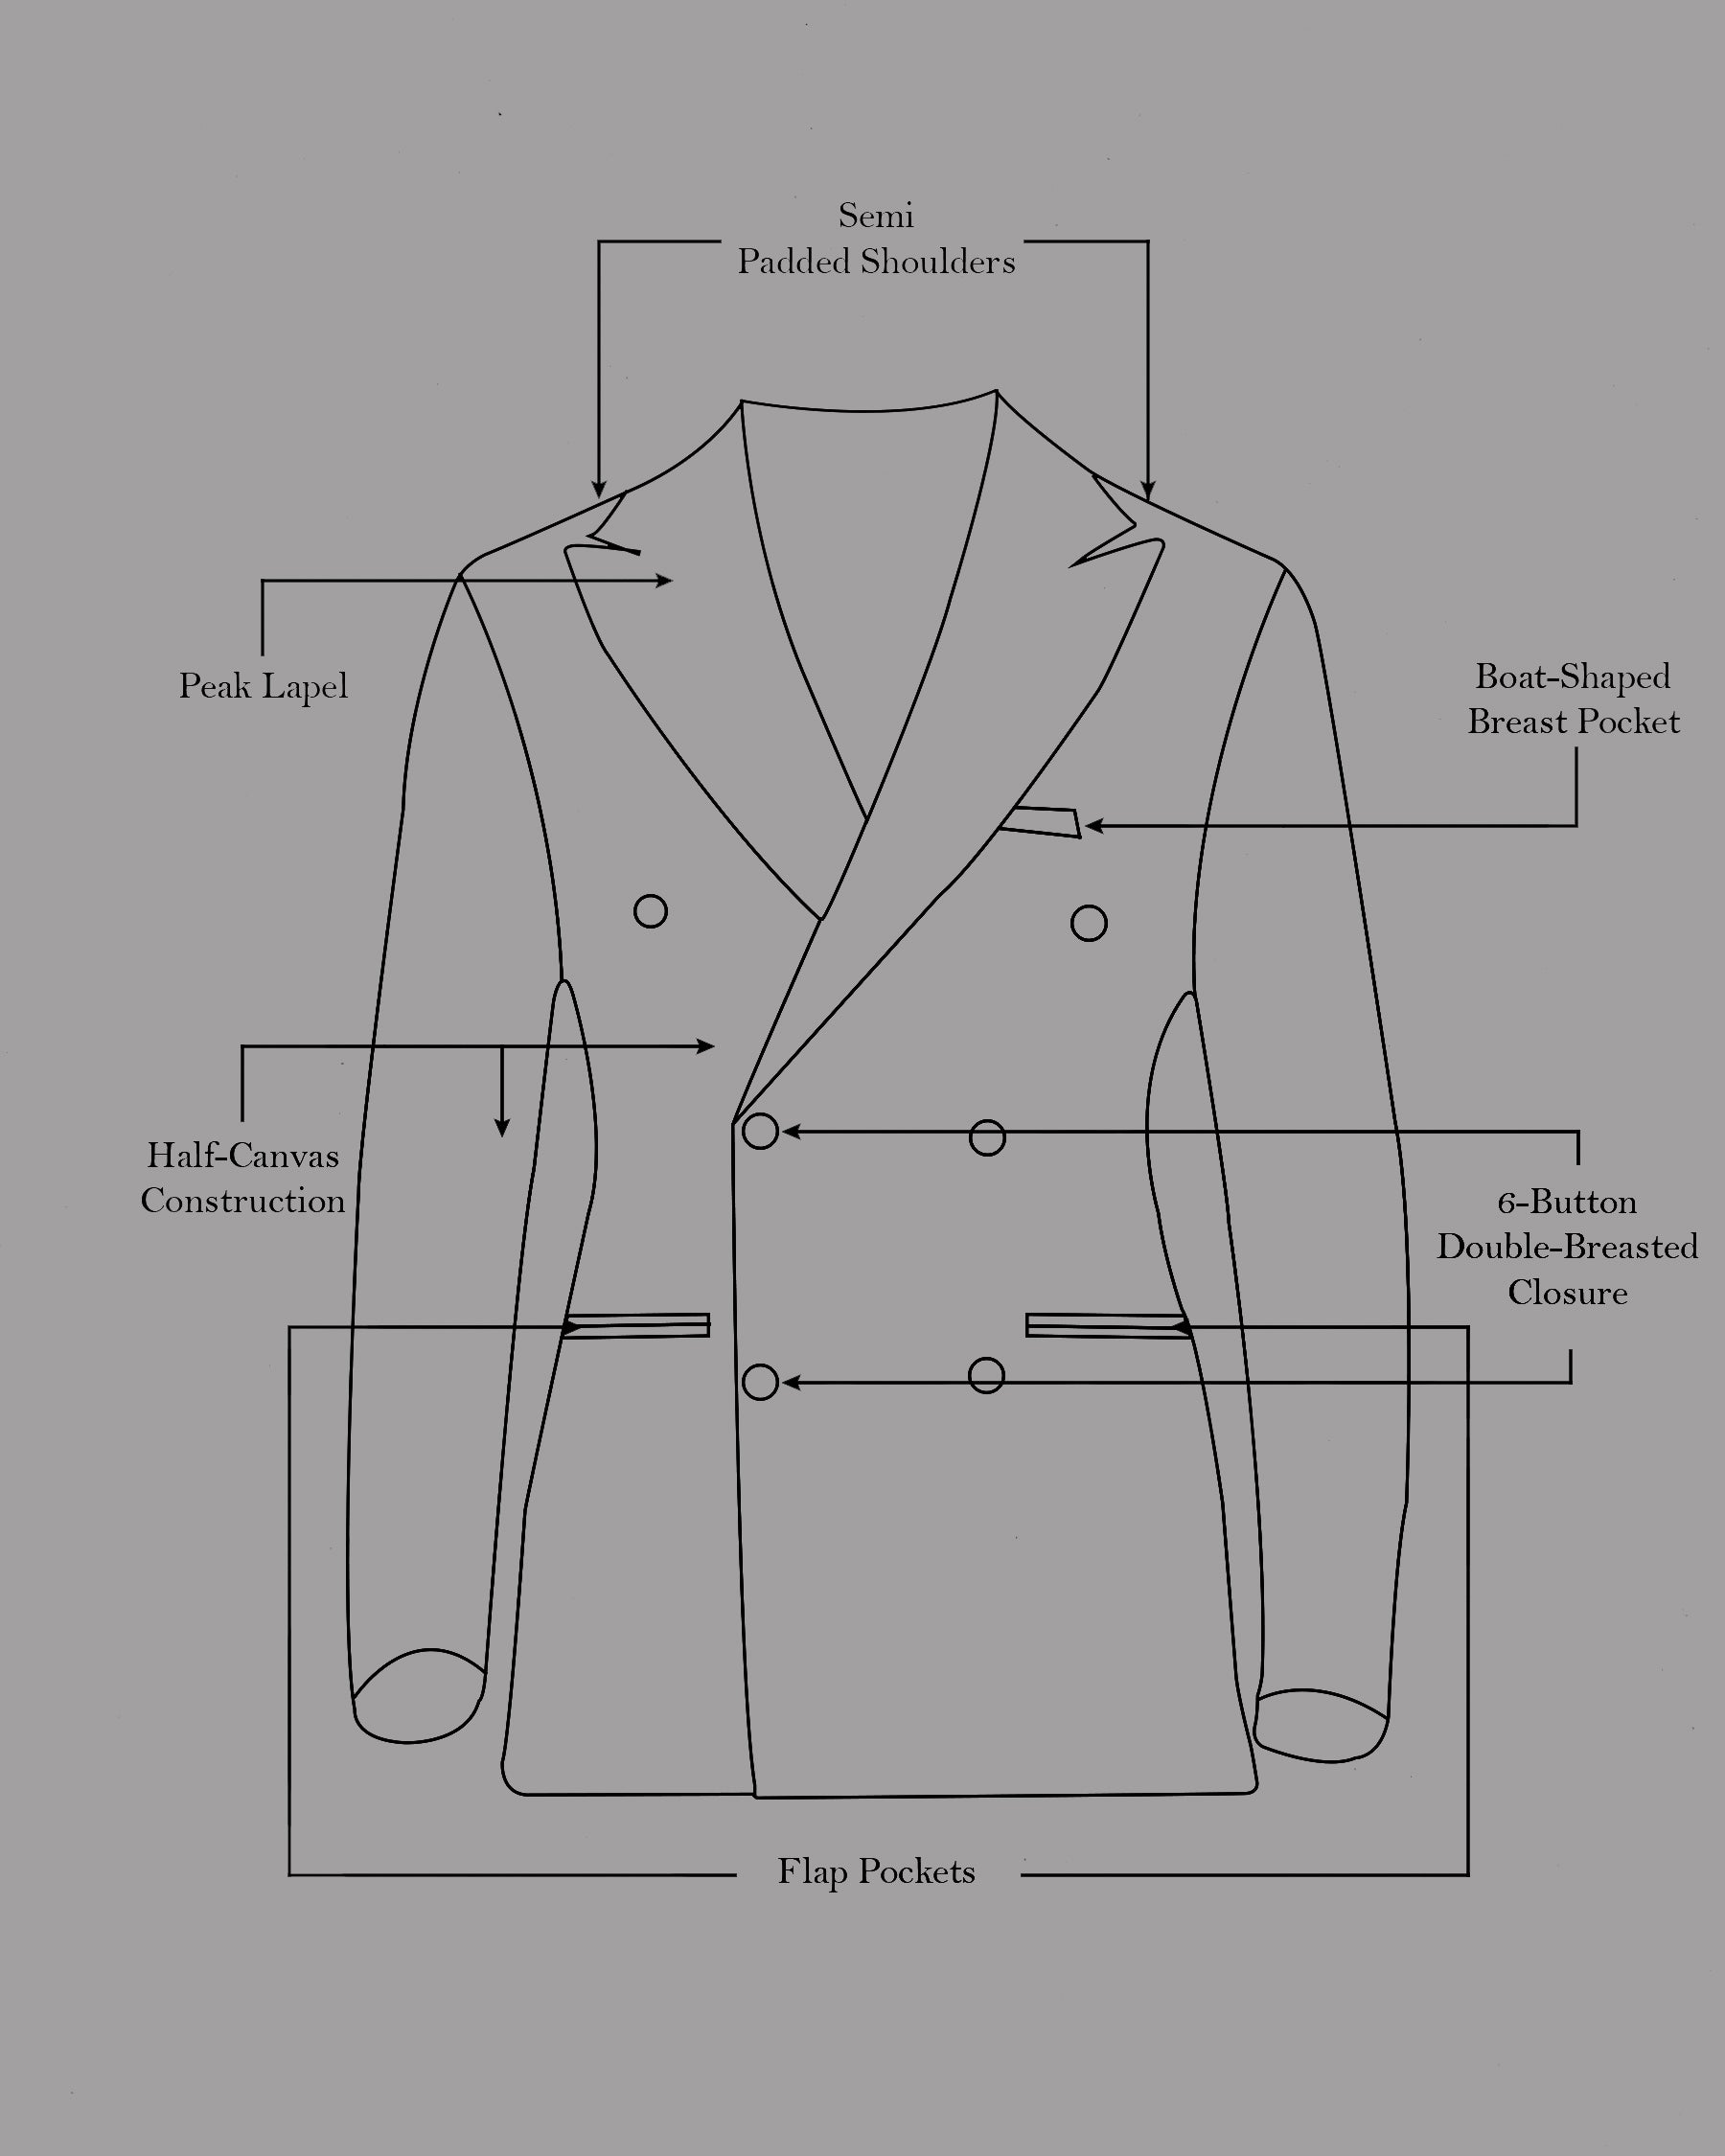 Iridium Grey Double Breasted Suit